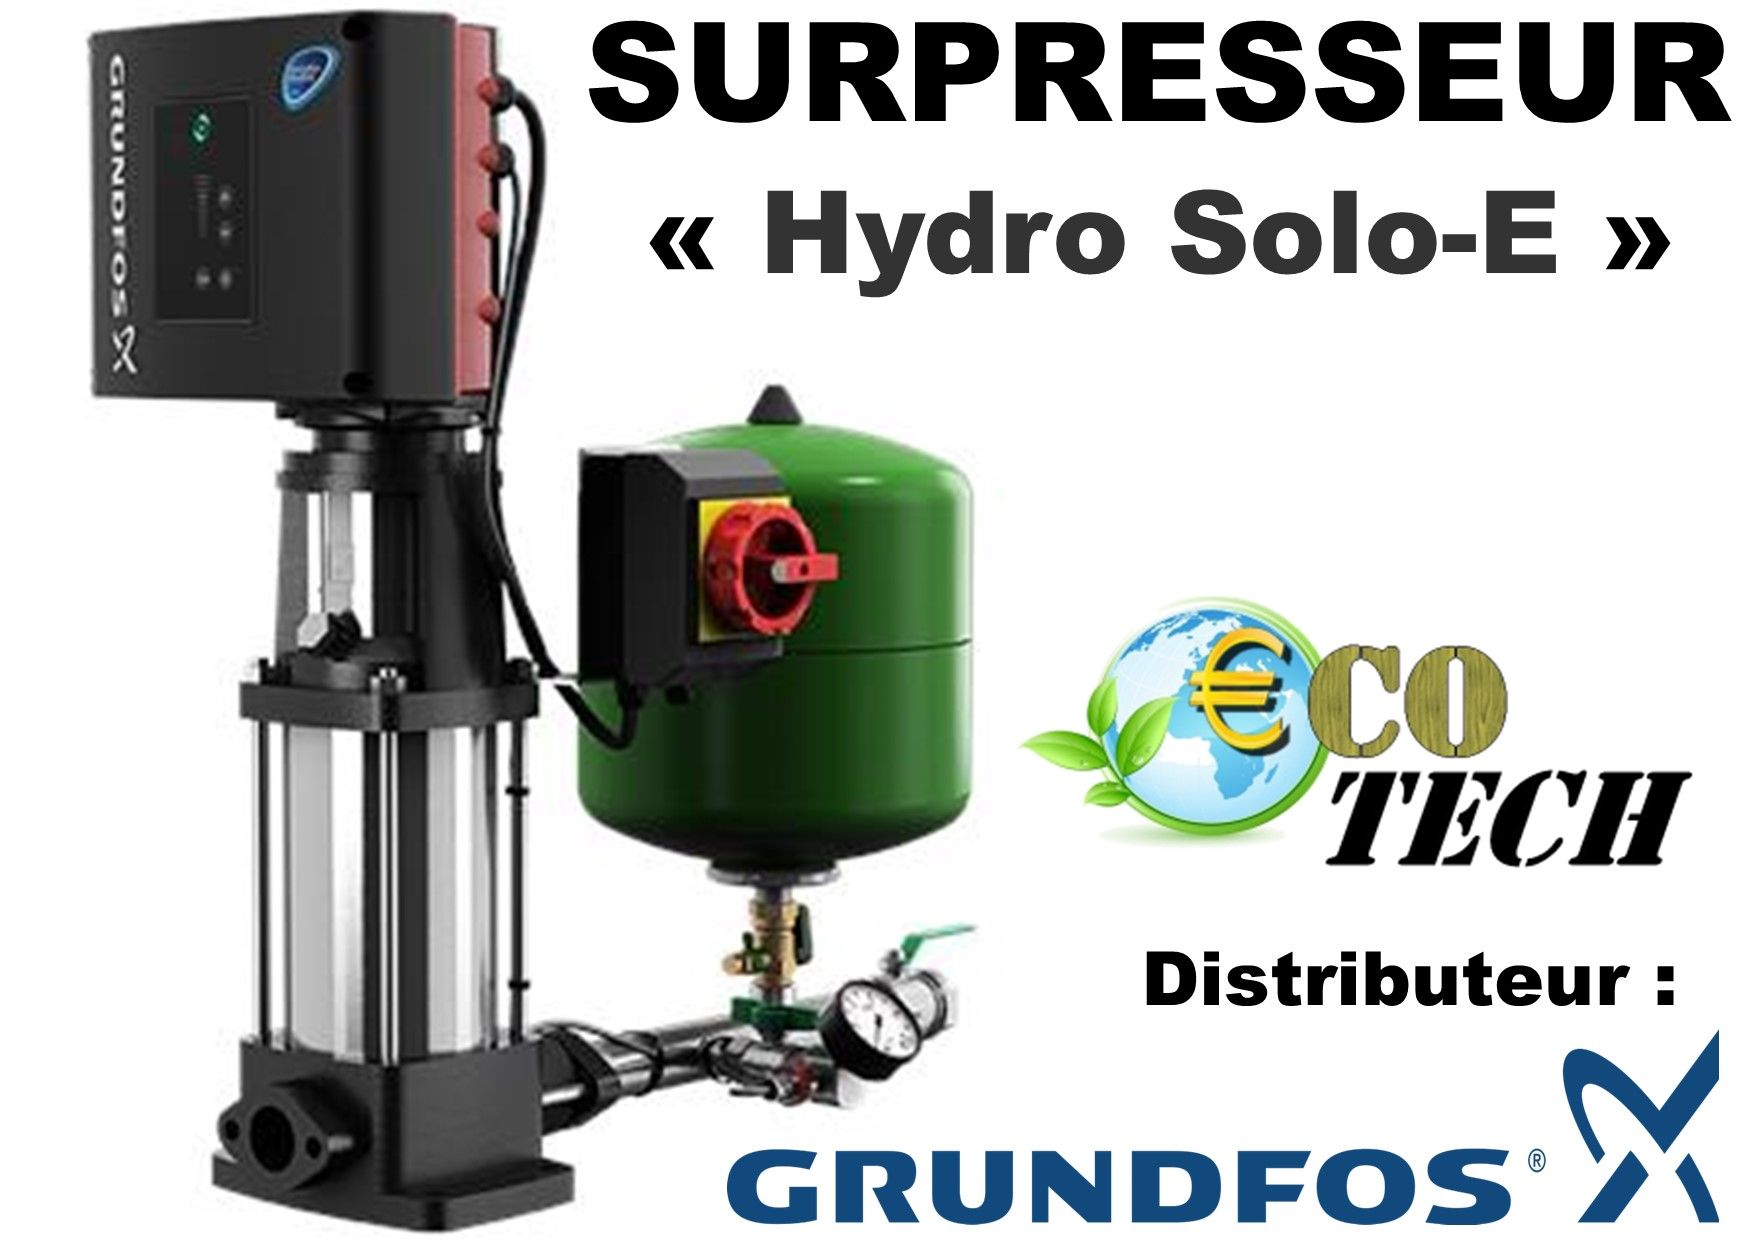 Grundfos surpresseur hydro solo e -  groupe de surpression_0